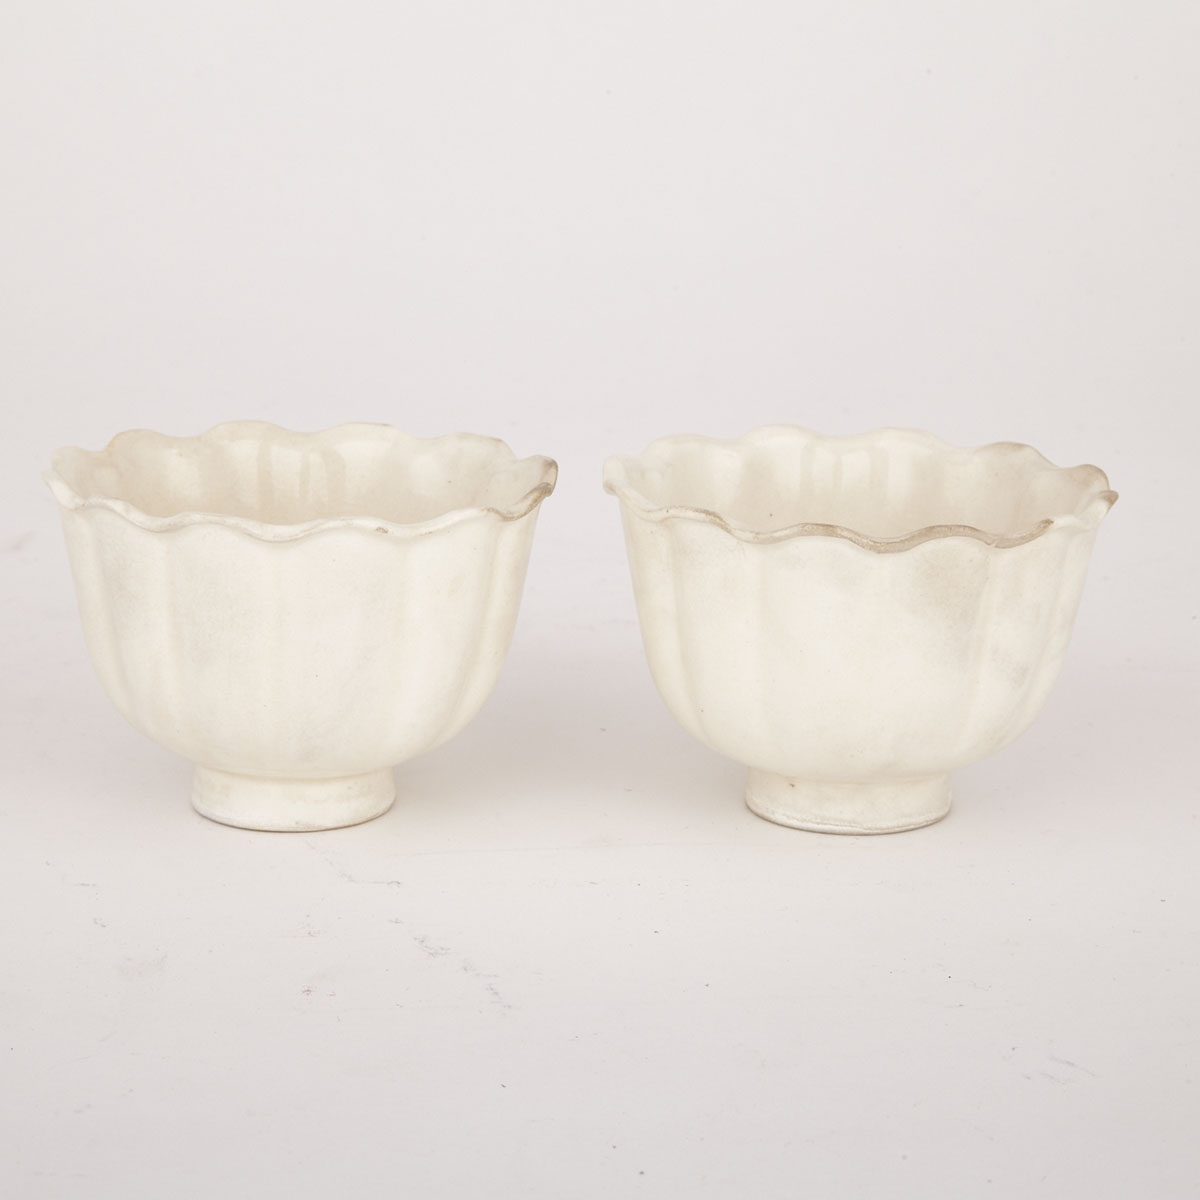 Pair of Ding Style Lotus Bowl